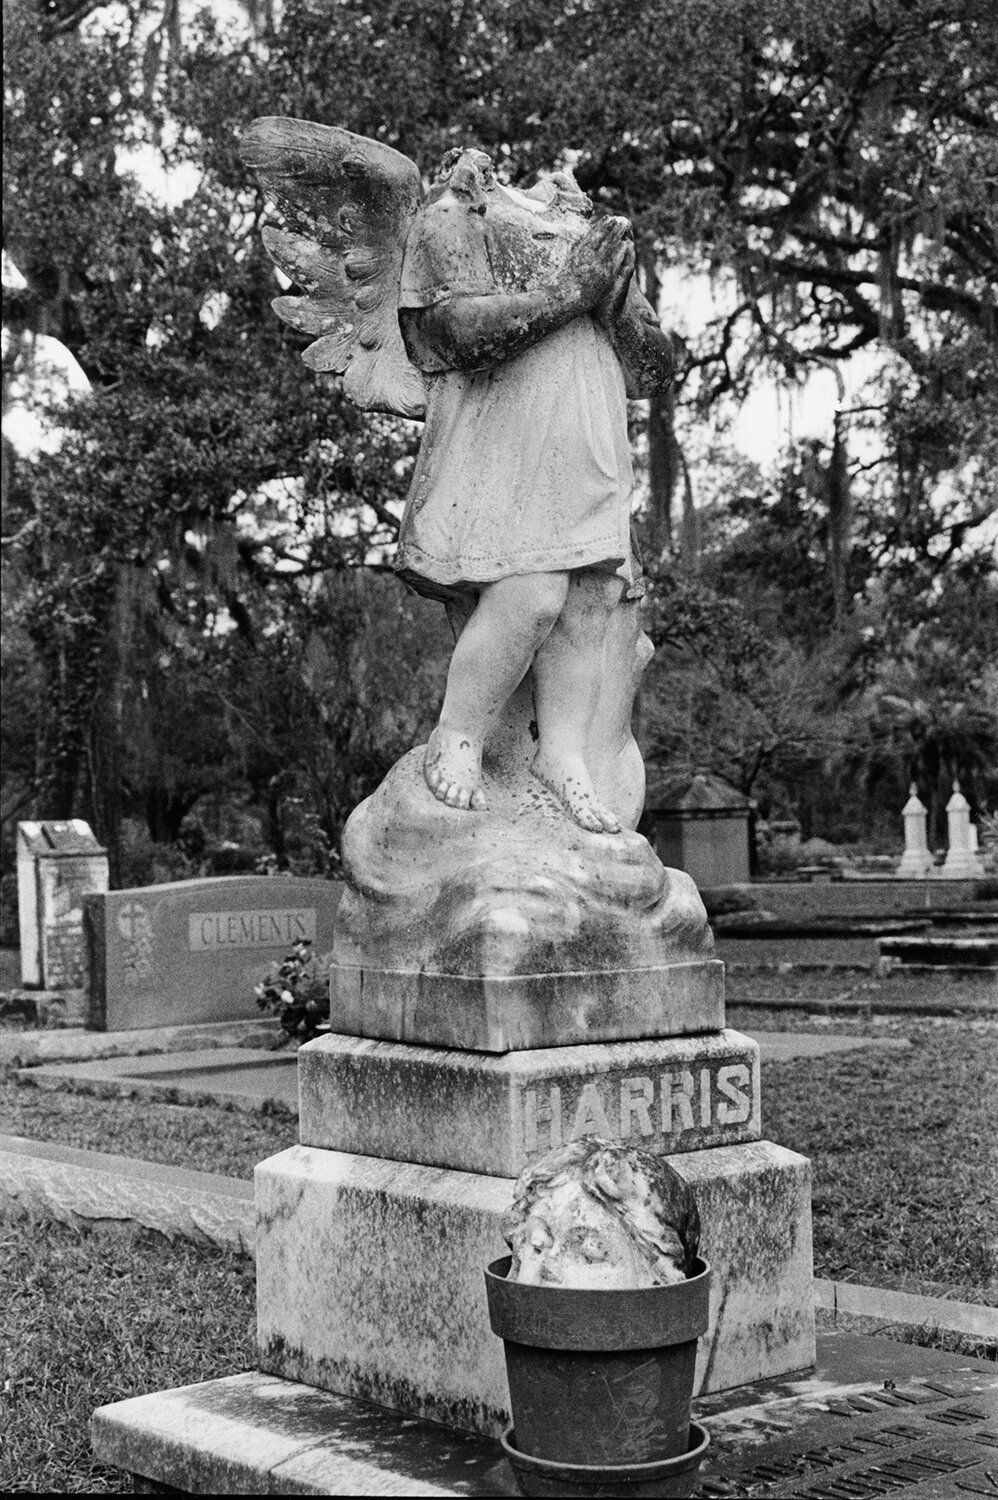   Sarah Will Harris statue, Oak Cemetery , 1999 Silver Gelatin Print 14 x 11 in. (paper size) The Do Good Fund, Inc., 2017-71 